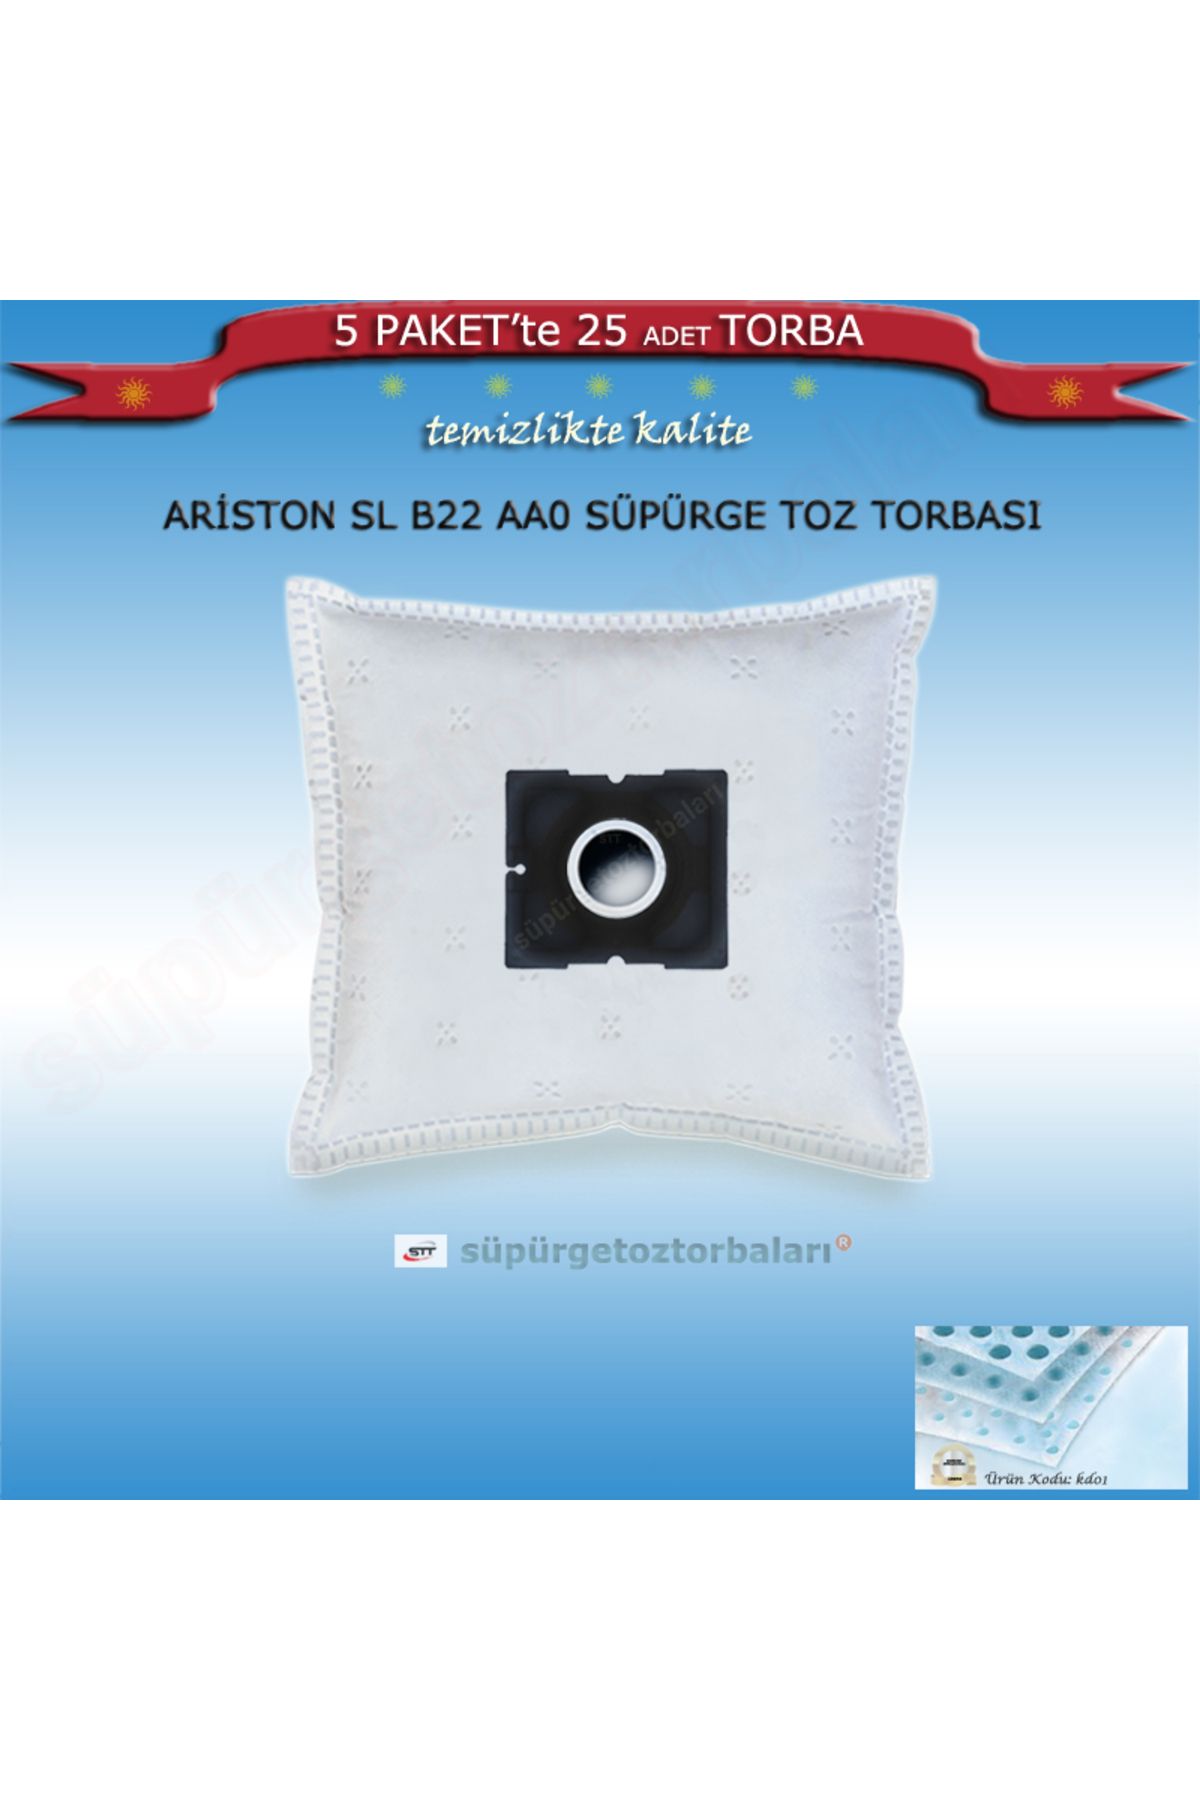 Ariston Sl B22 Aa0 Süpürge Toz Torbası 25 Adet Torba Kd01